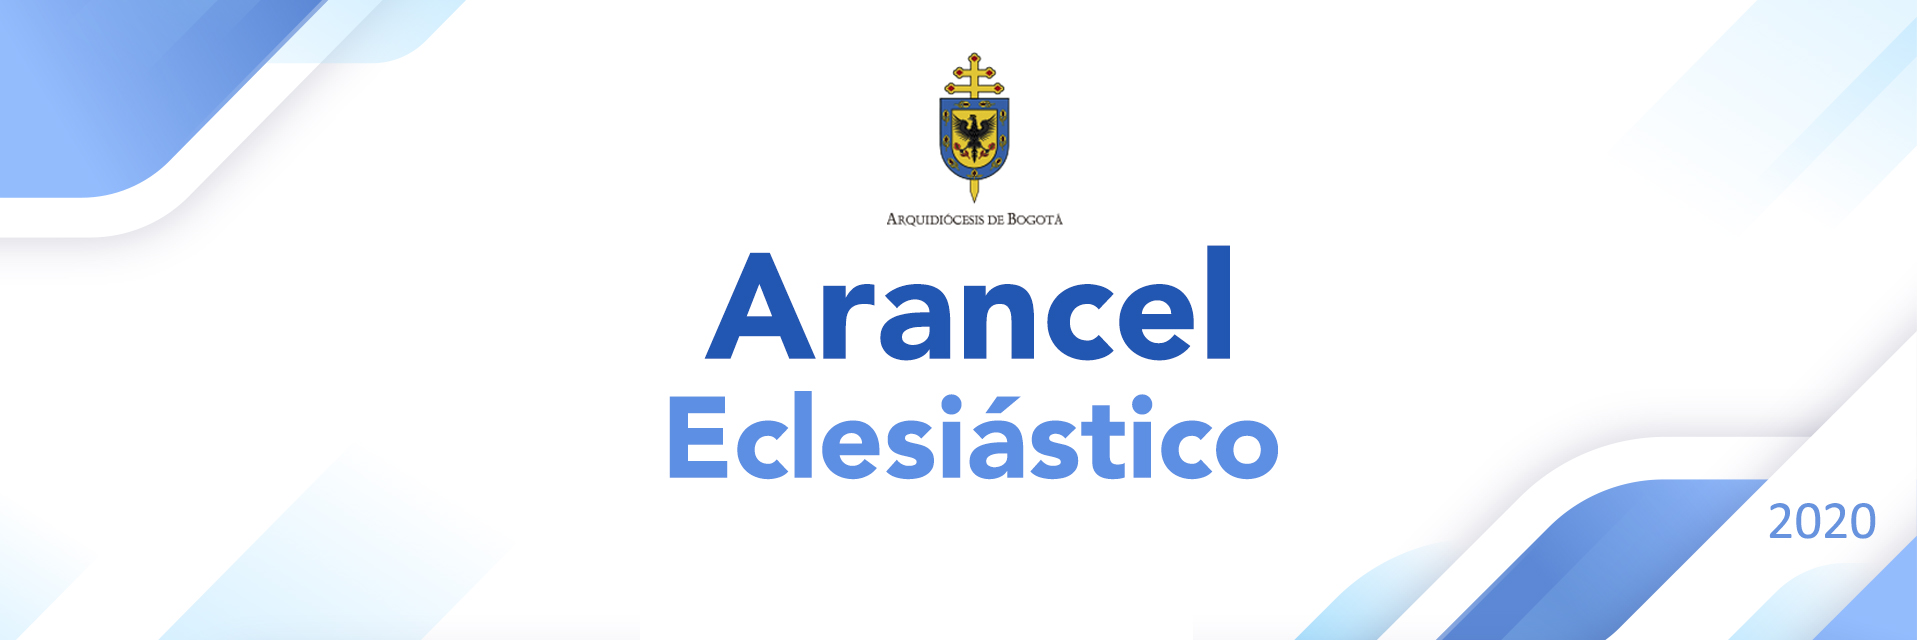 https://arquimedia.s3.amazonaws.com/1/2019--2/banner-arancel-eclesiastico-2020jpg.jpg